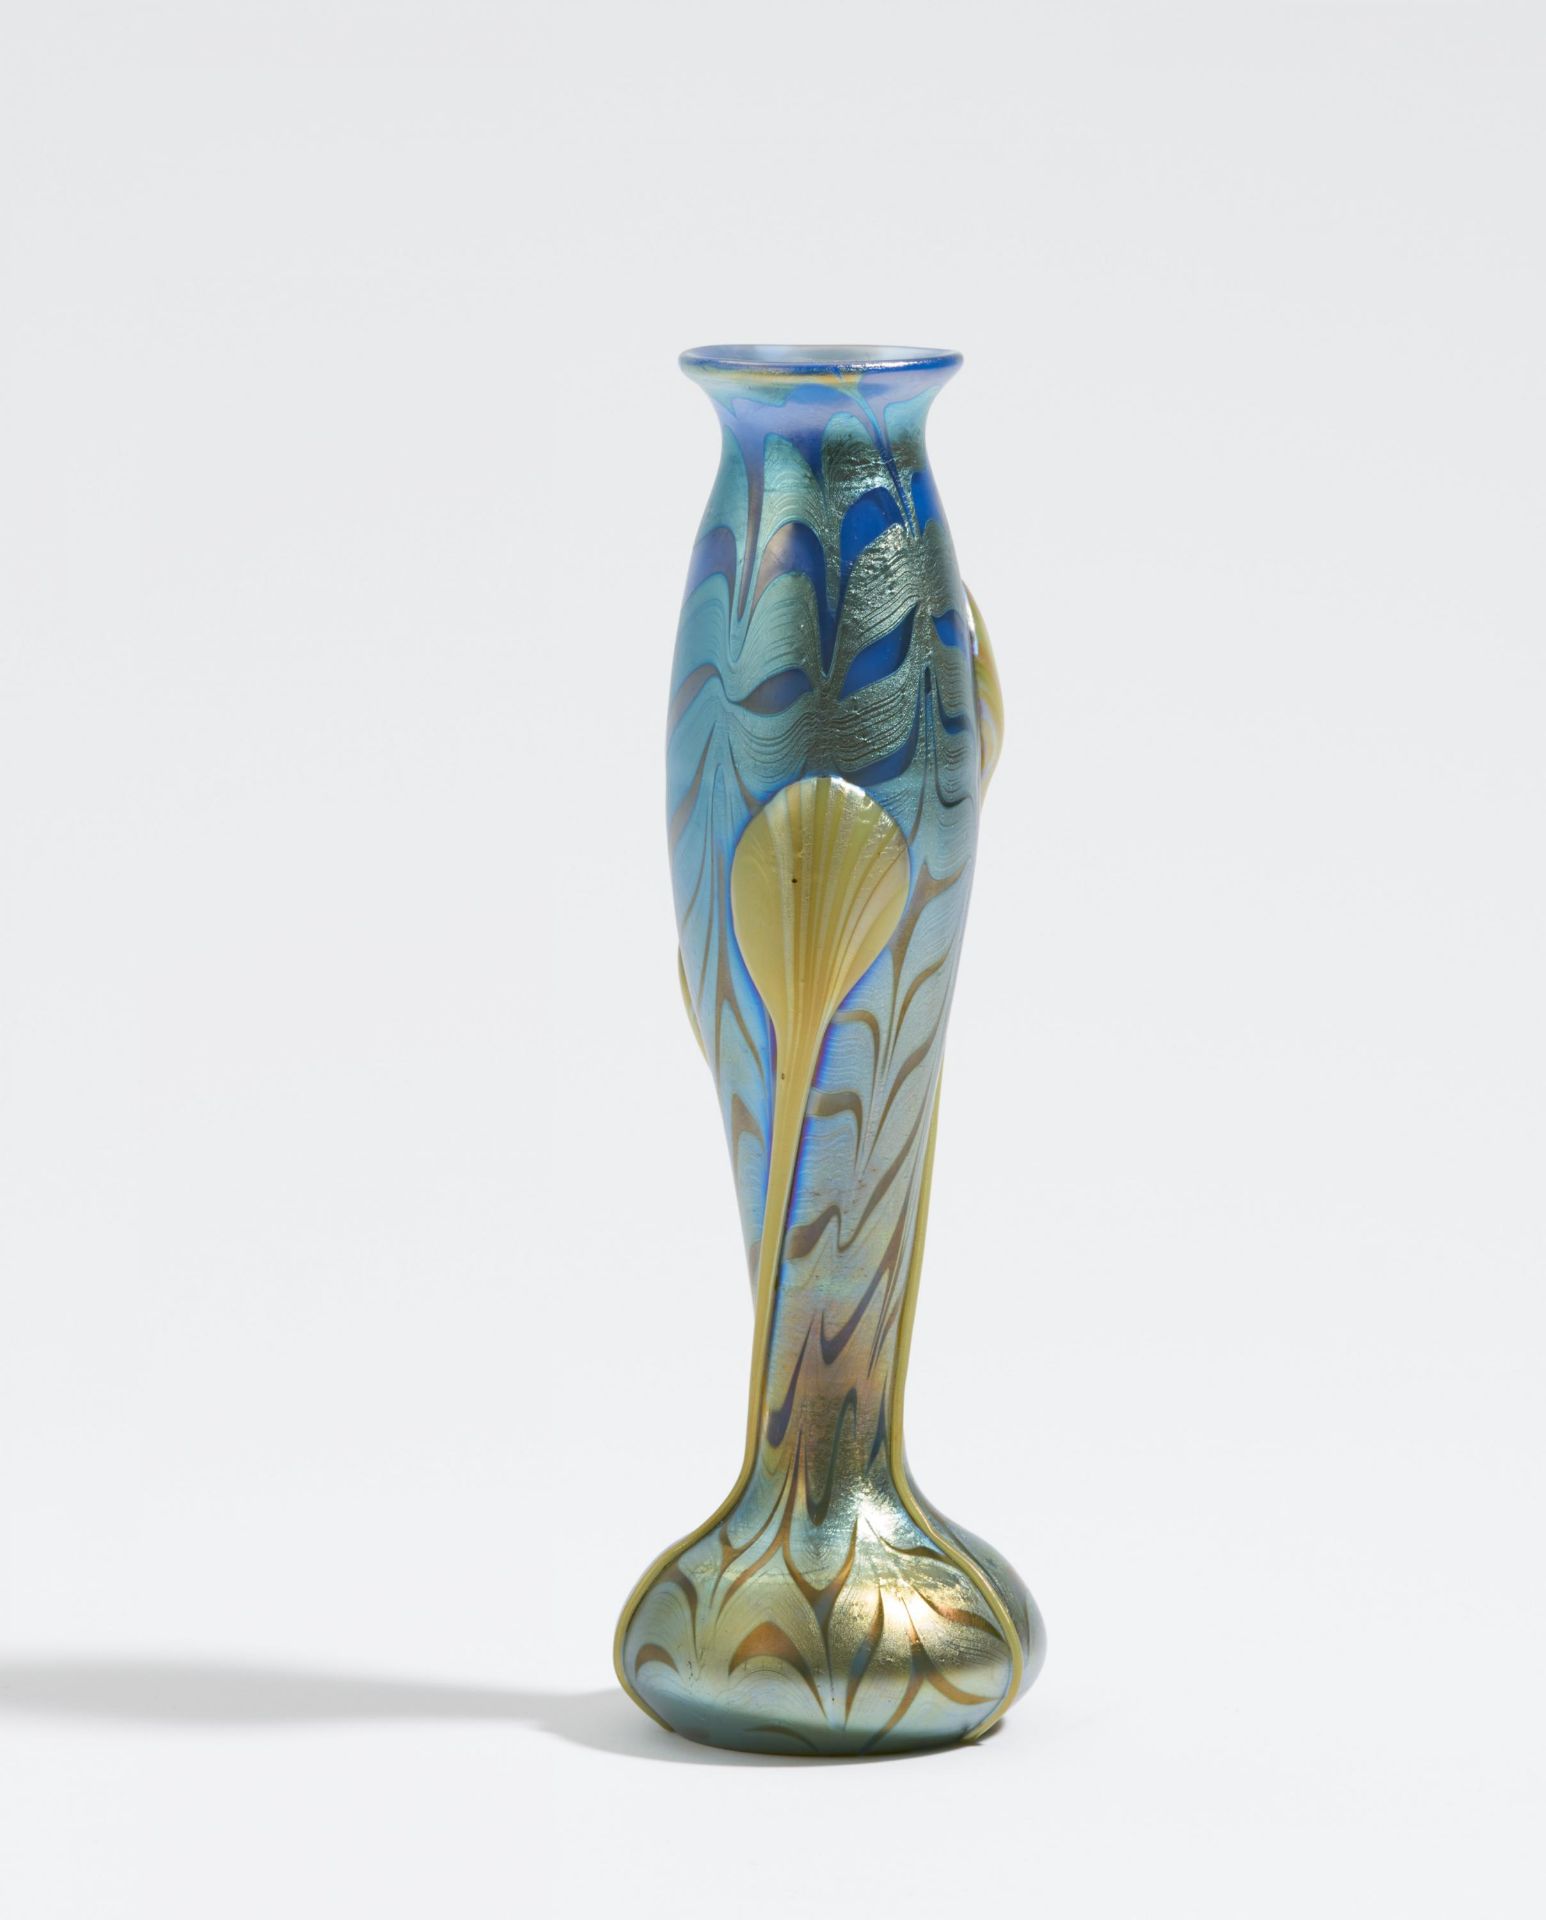 Small club-shaped vase "Phänomen" - Image 3 of 6